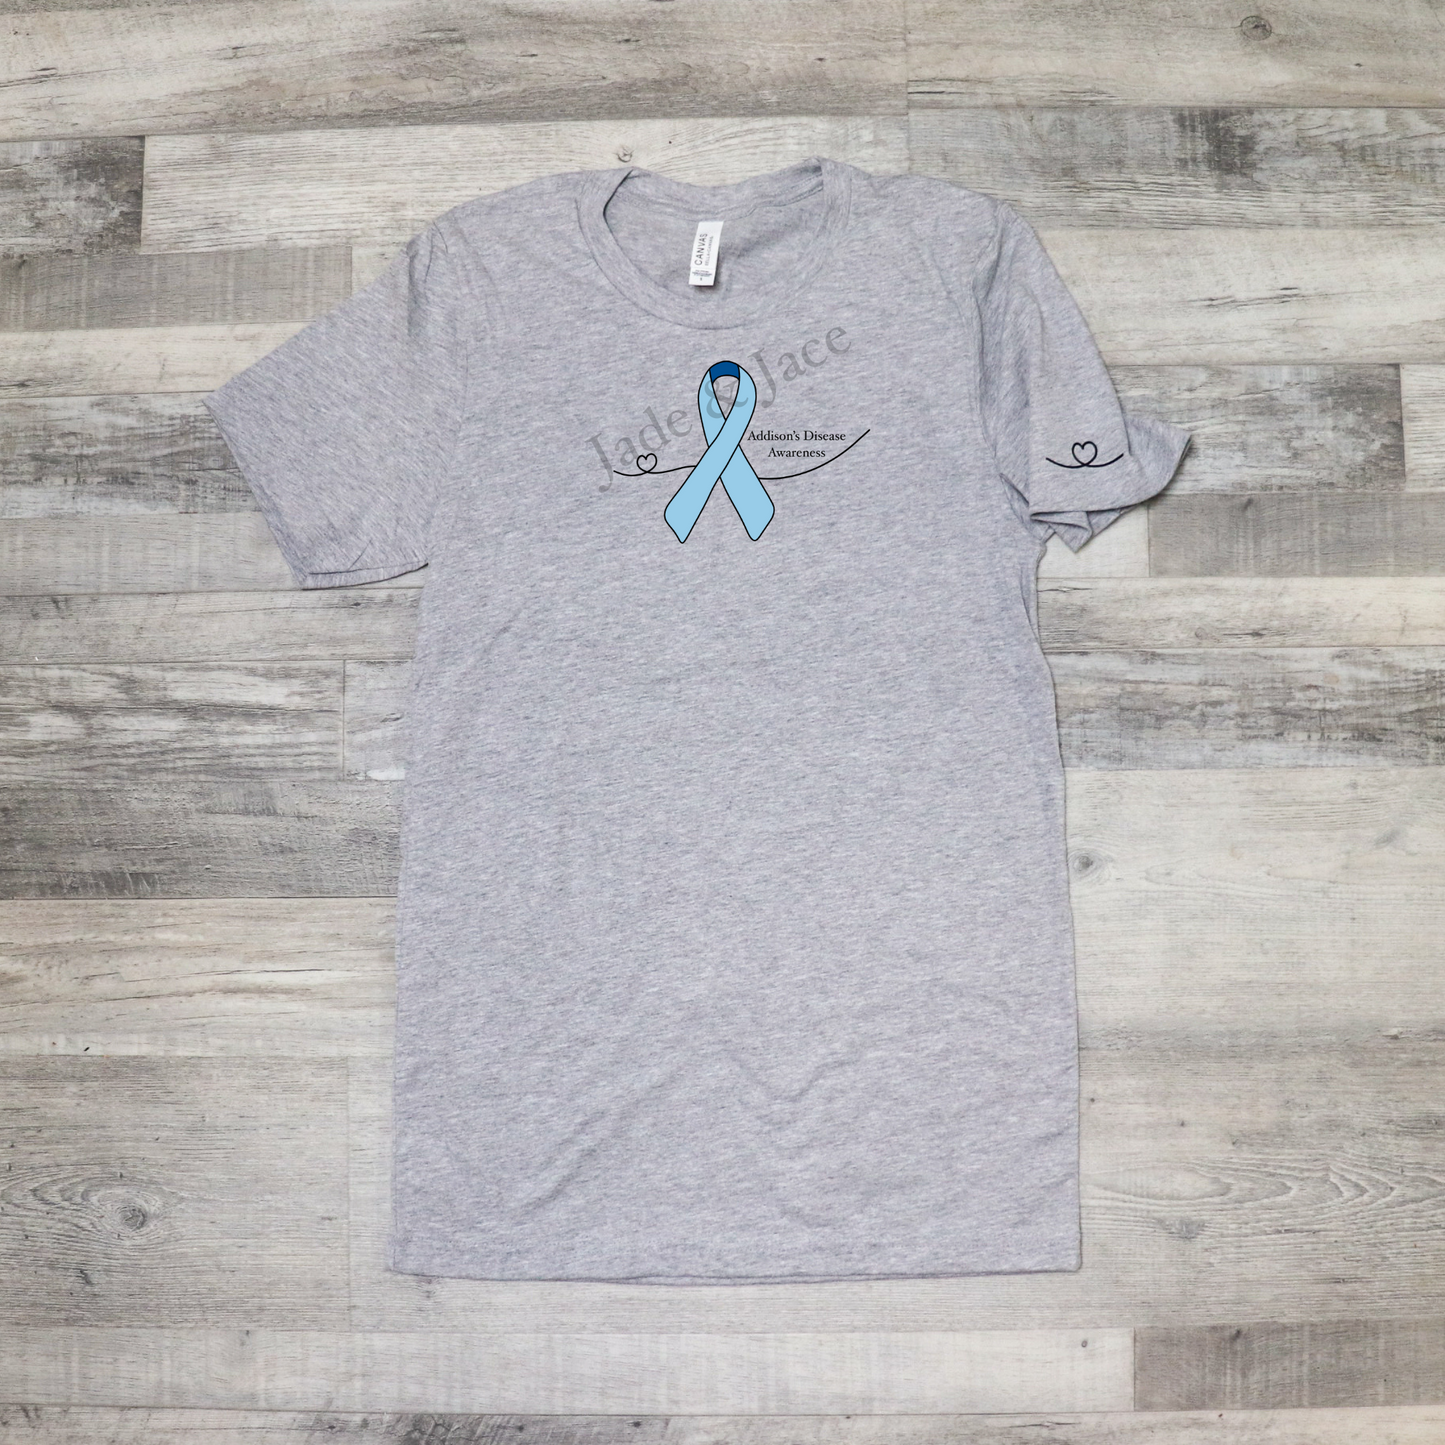 Addison’s Disease Awareness T-Shirt